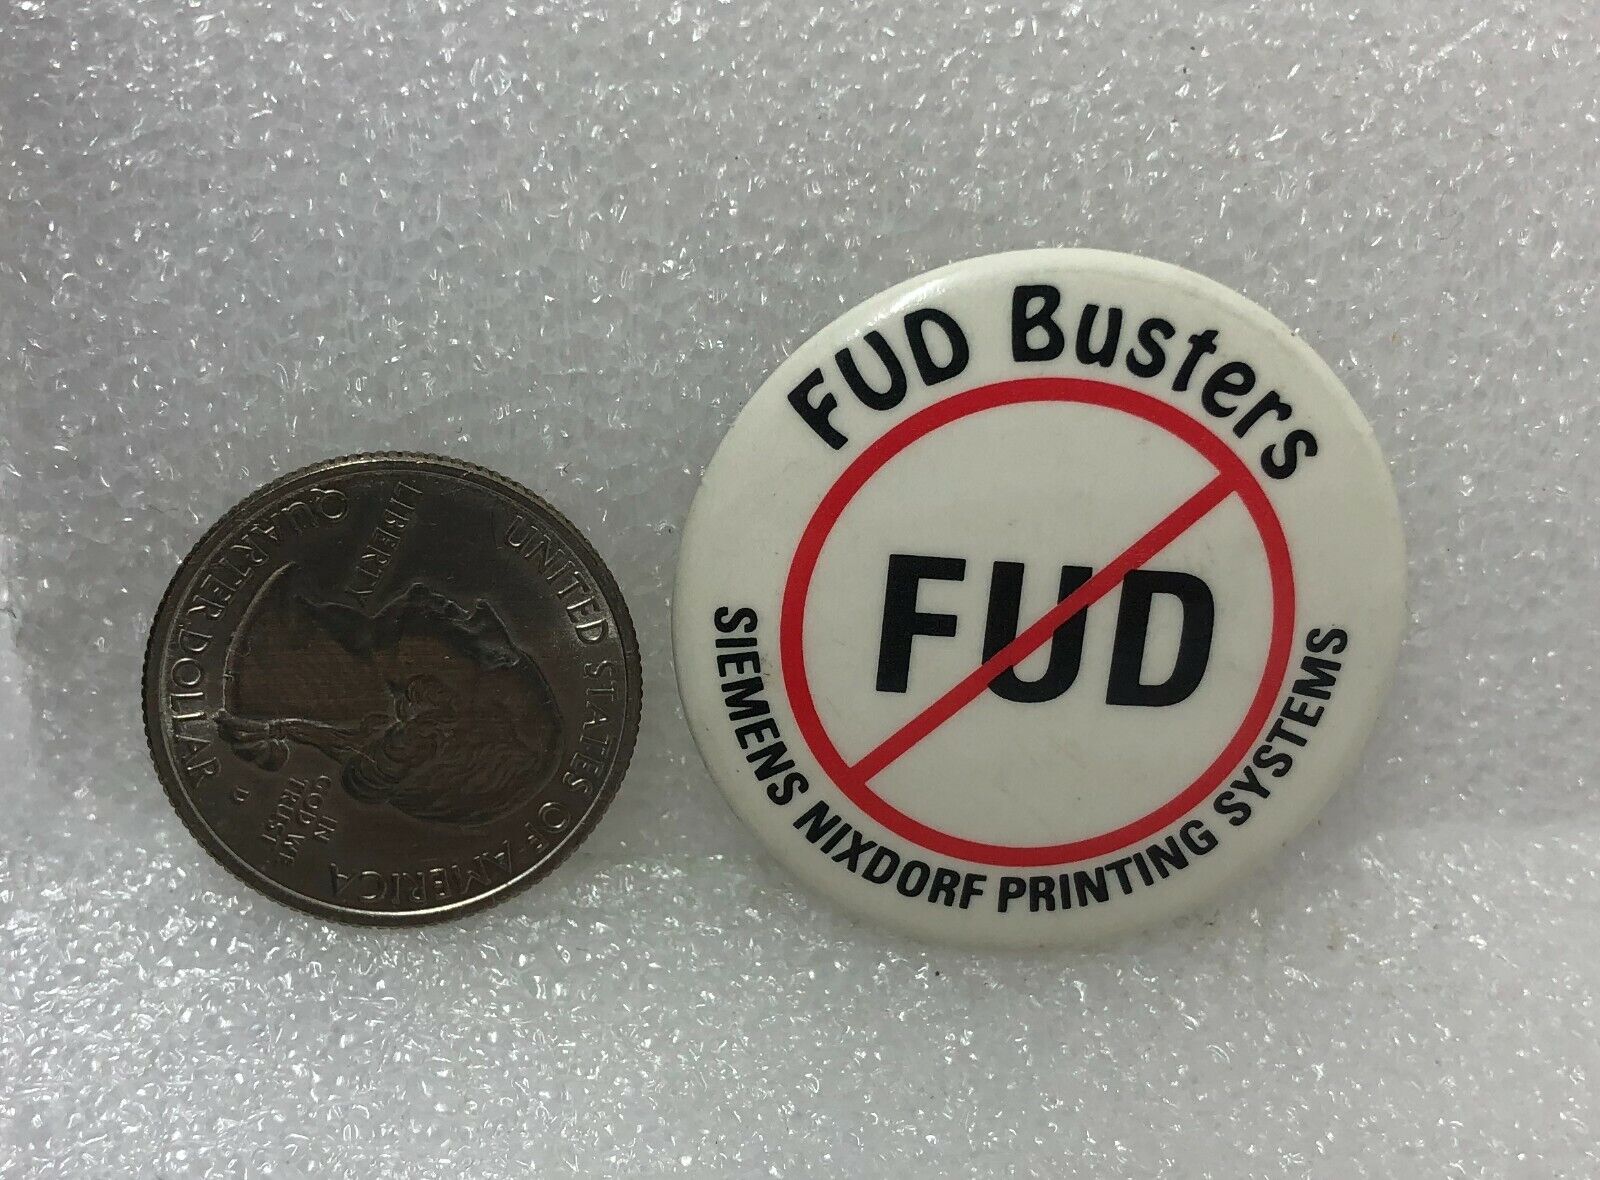 Siemen Nixdorf Printing Systems FUD Busters Advertising Pin